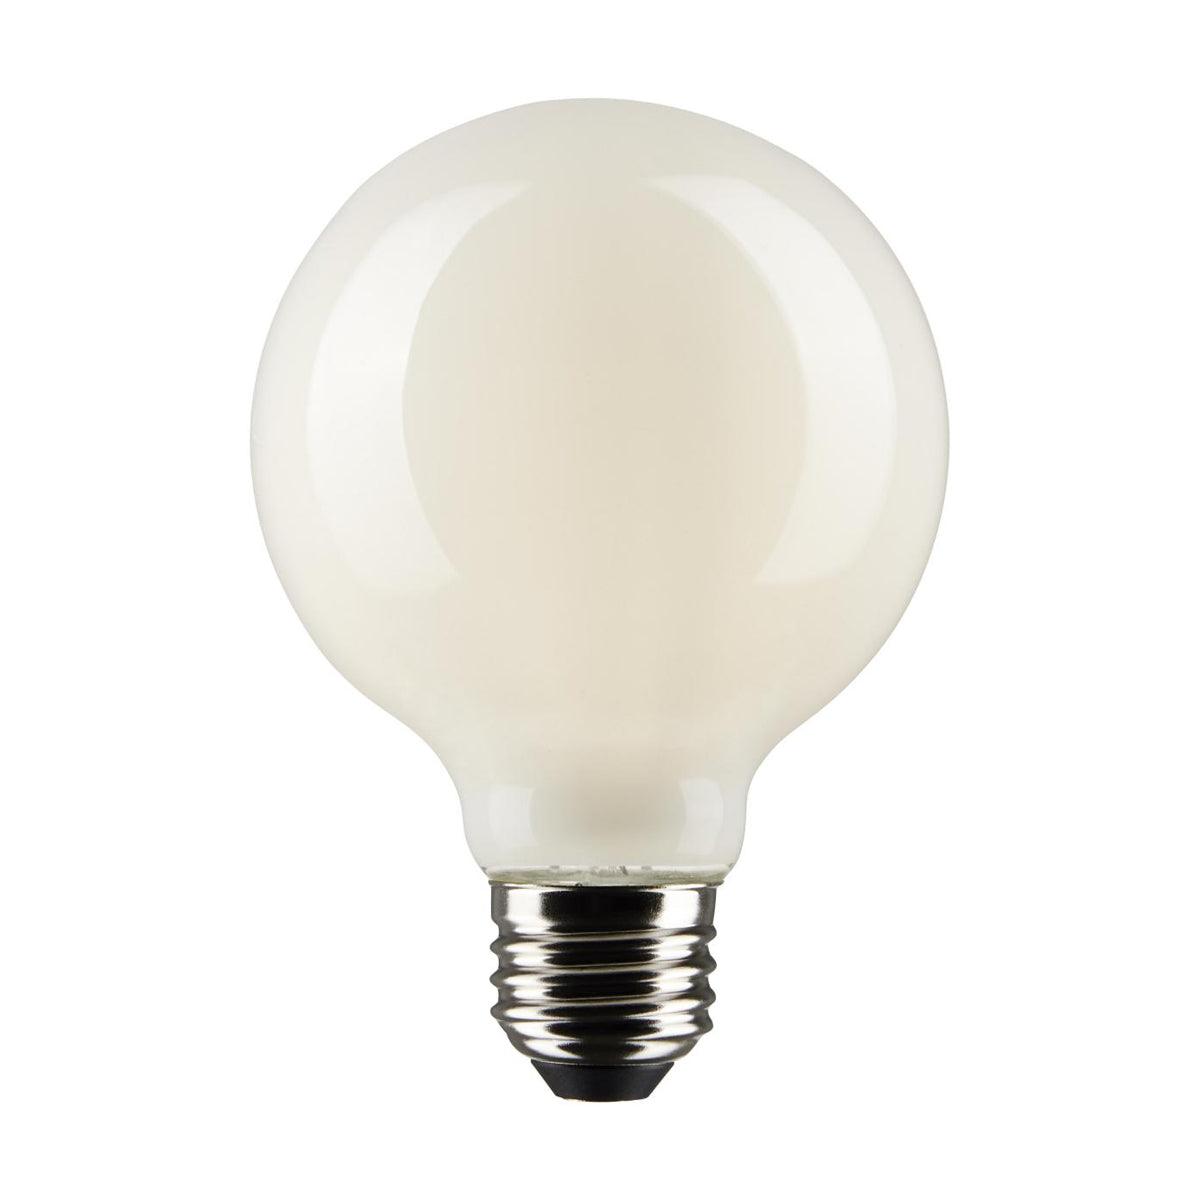 G25 LED Globe Bulb, 6 Watt, 500 Lumens, 4000K, E26 Medium Base, Frosted Finish